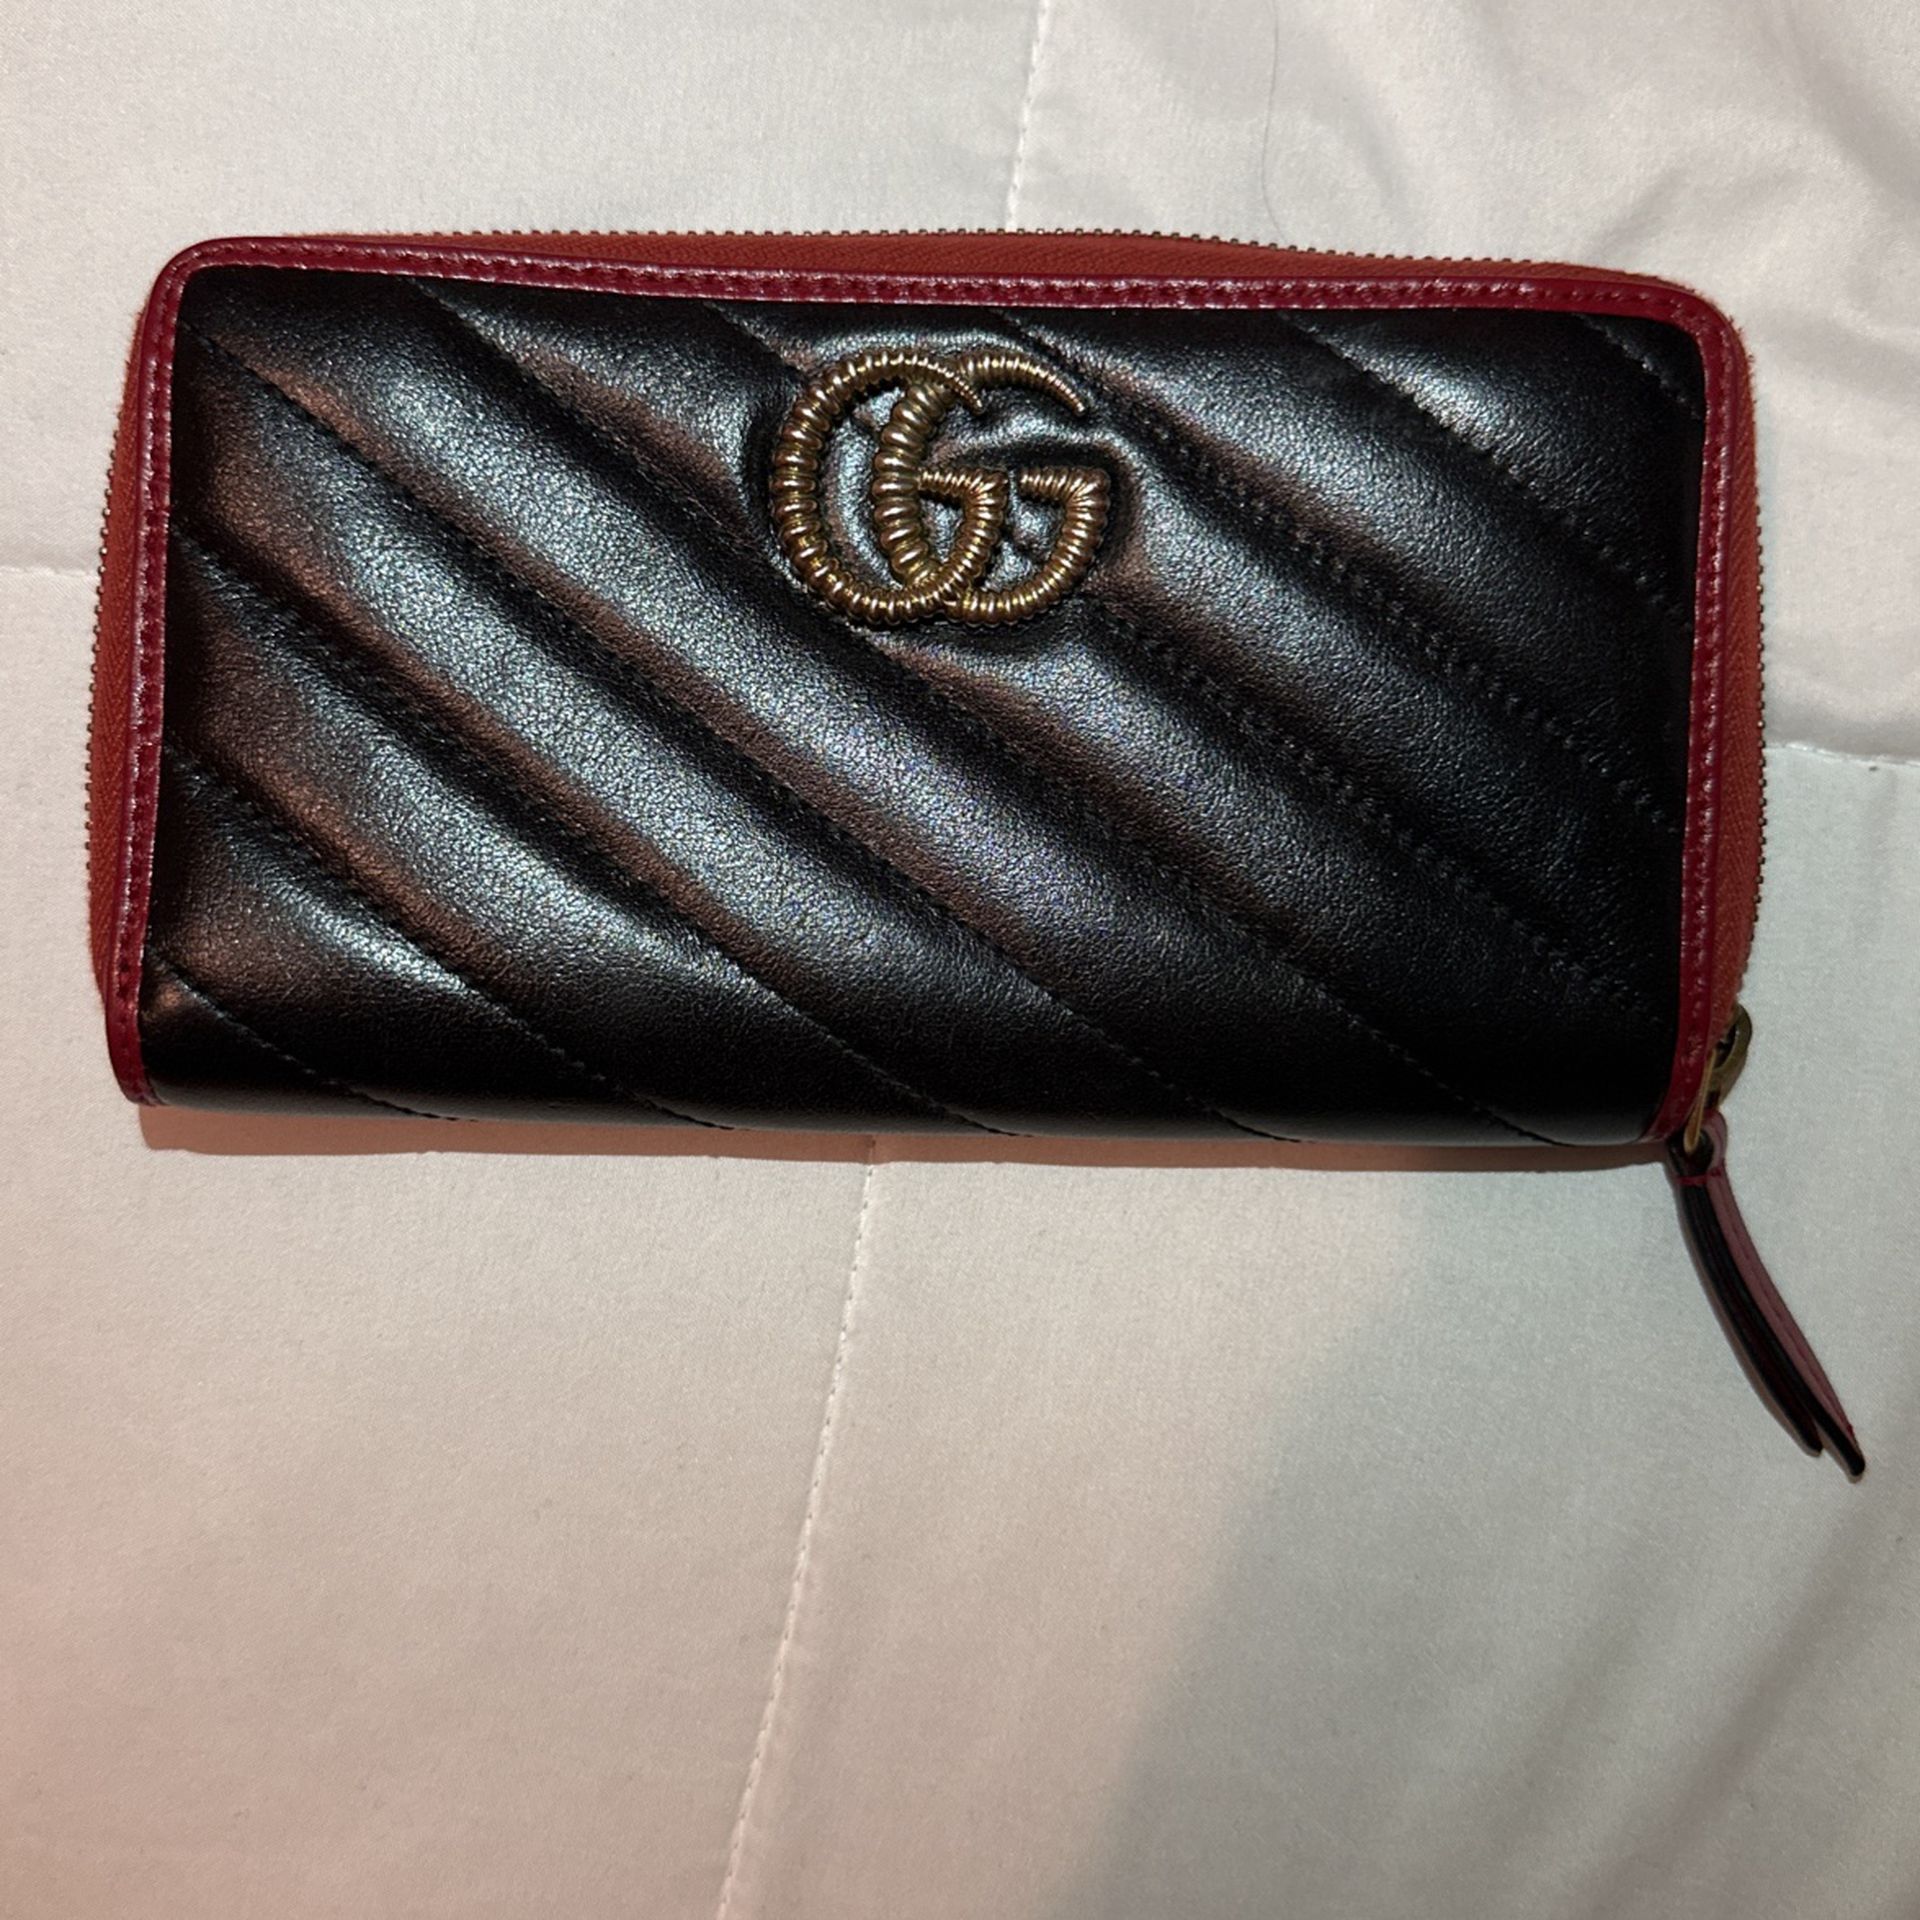 Gucci Marmont Leather Zip Around Wallet